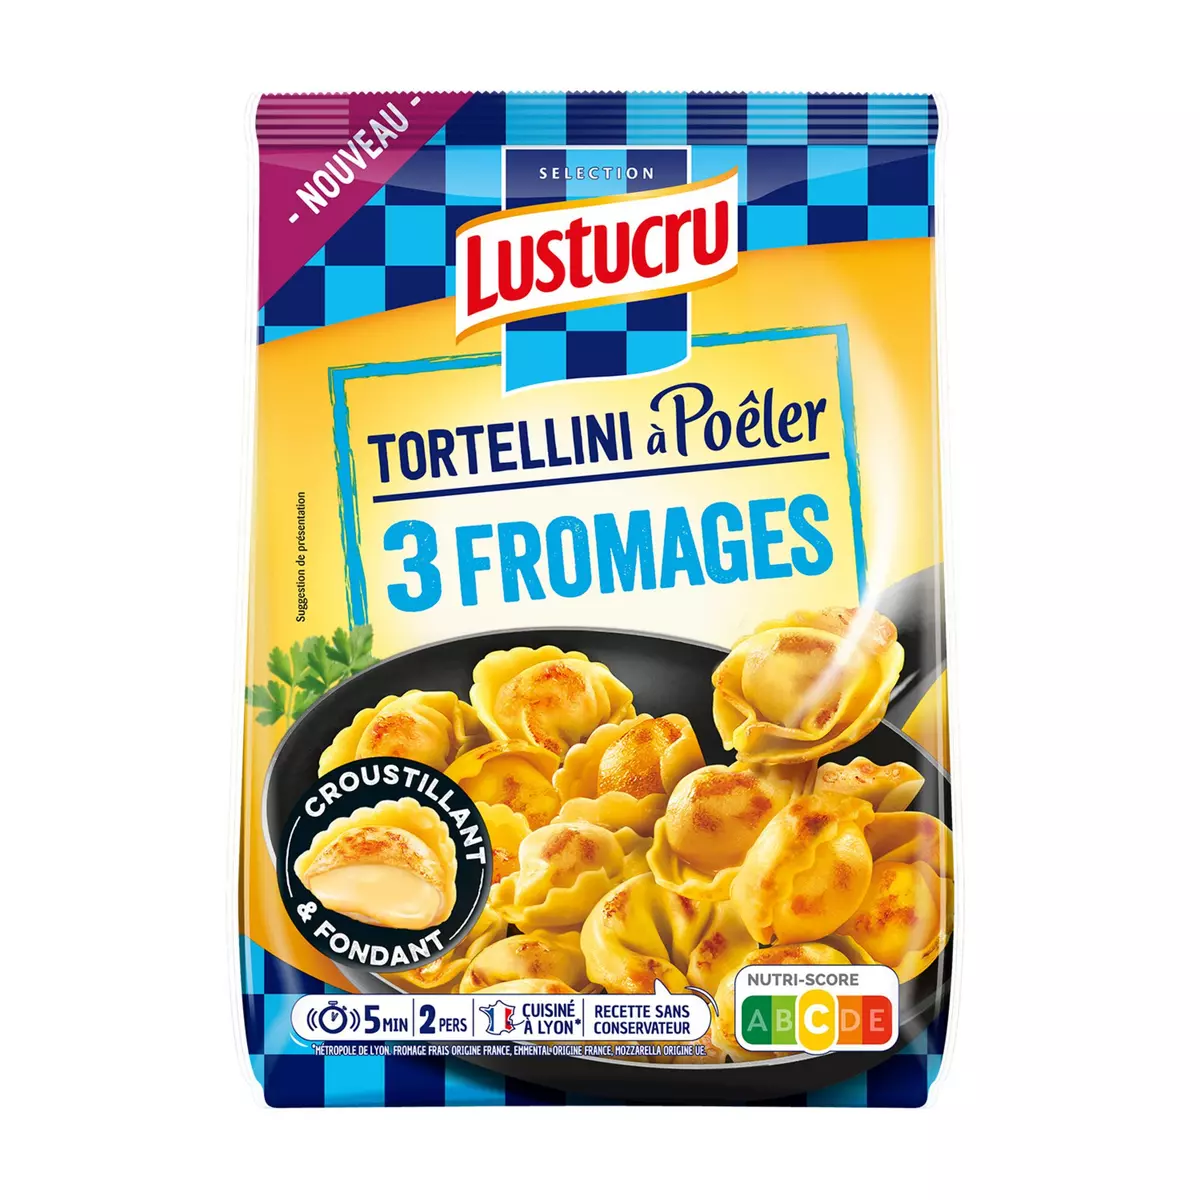 LUSTUCRU Tortellini à poêler 3 fromages 2 portions 300g